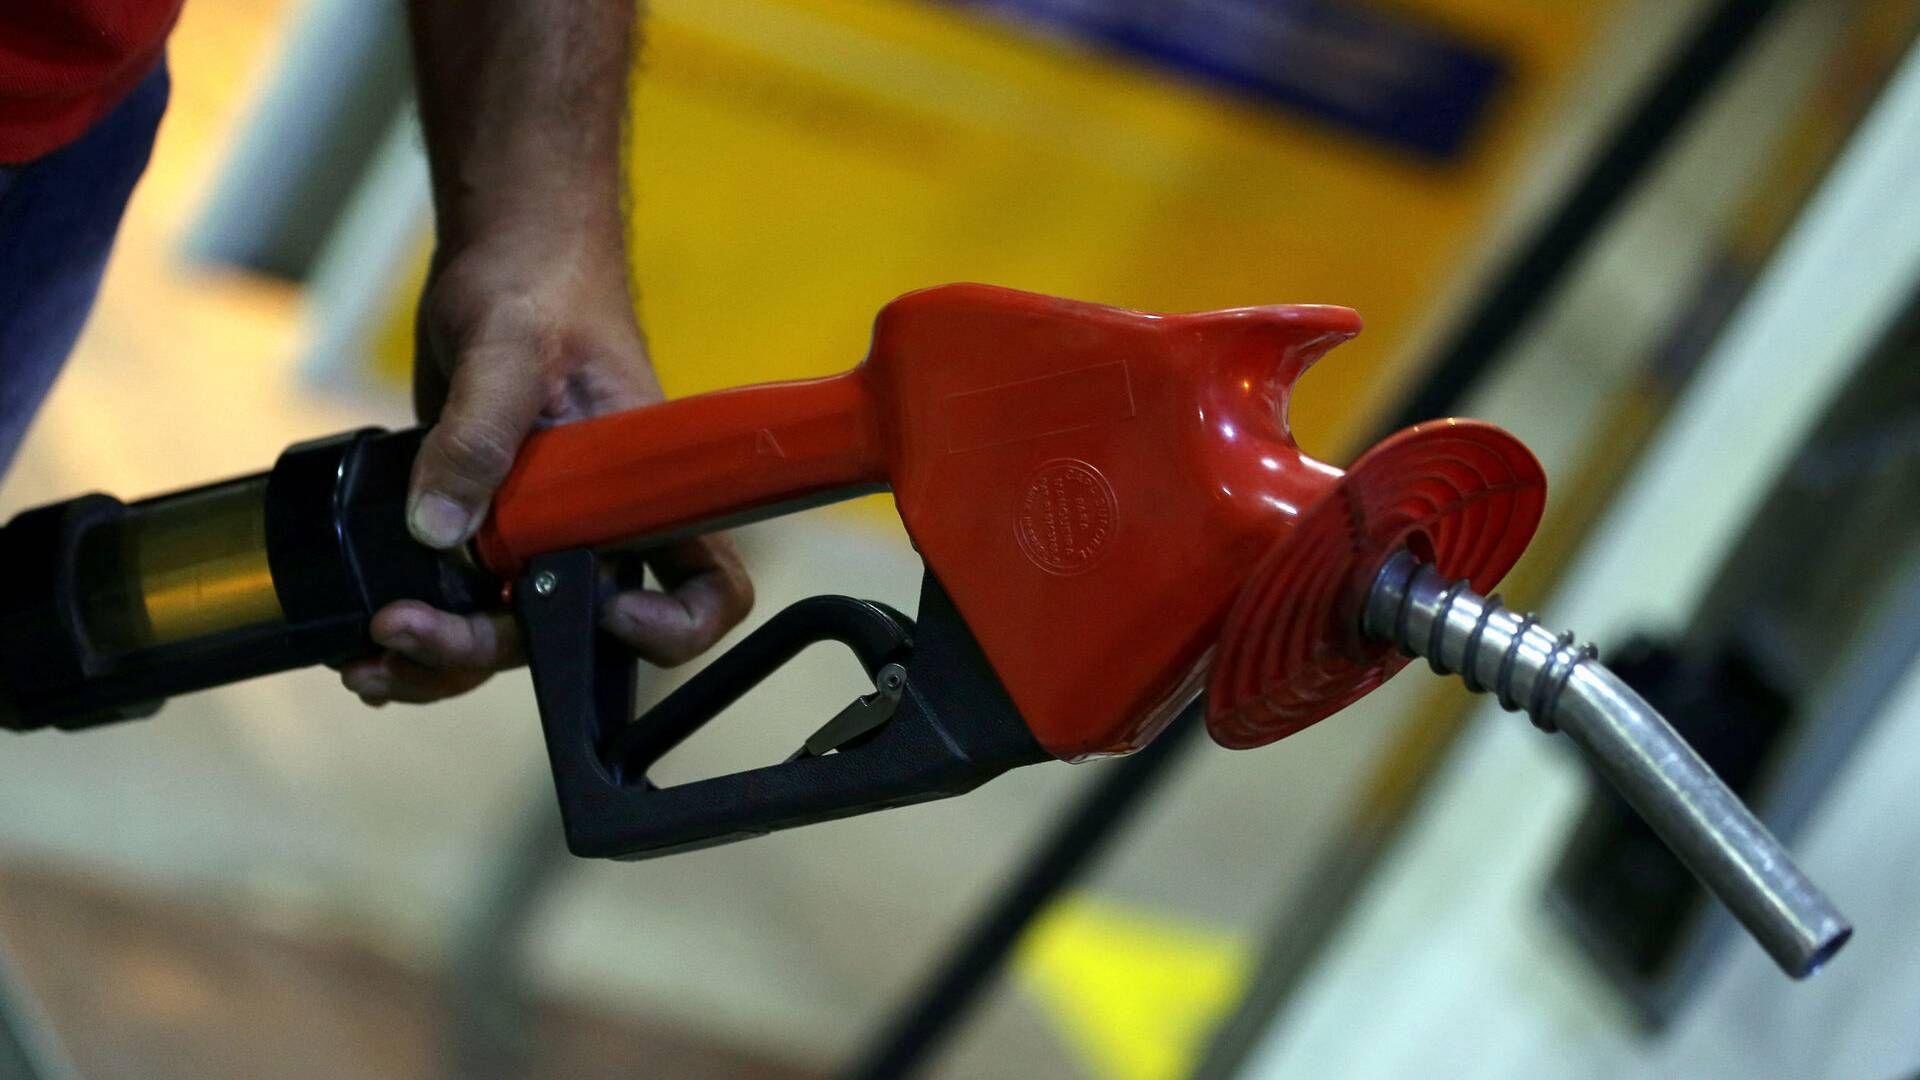 Olieprisen har stor betydning for brændstofpriserne. | Foto: Paulo Whitaker/Reuters/Ritzau Scanpix